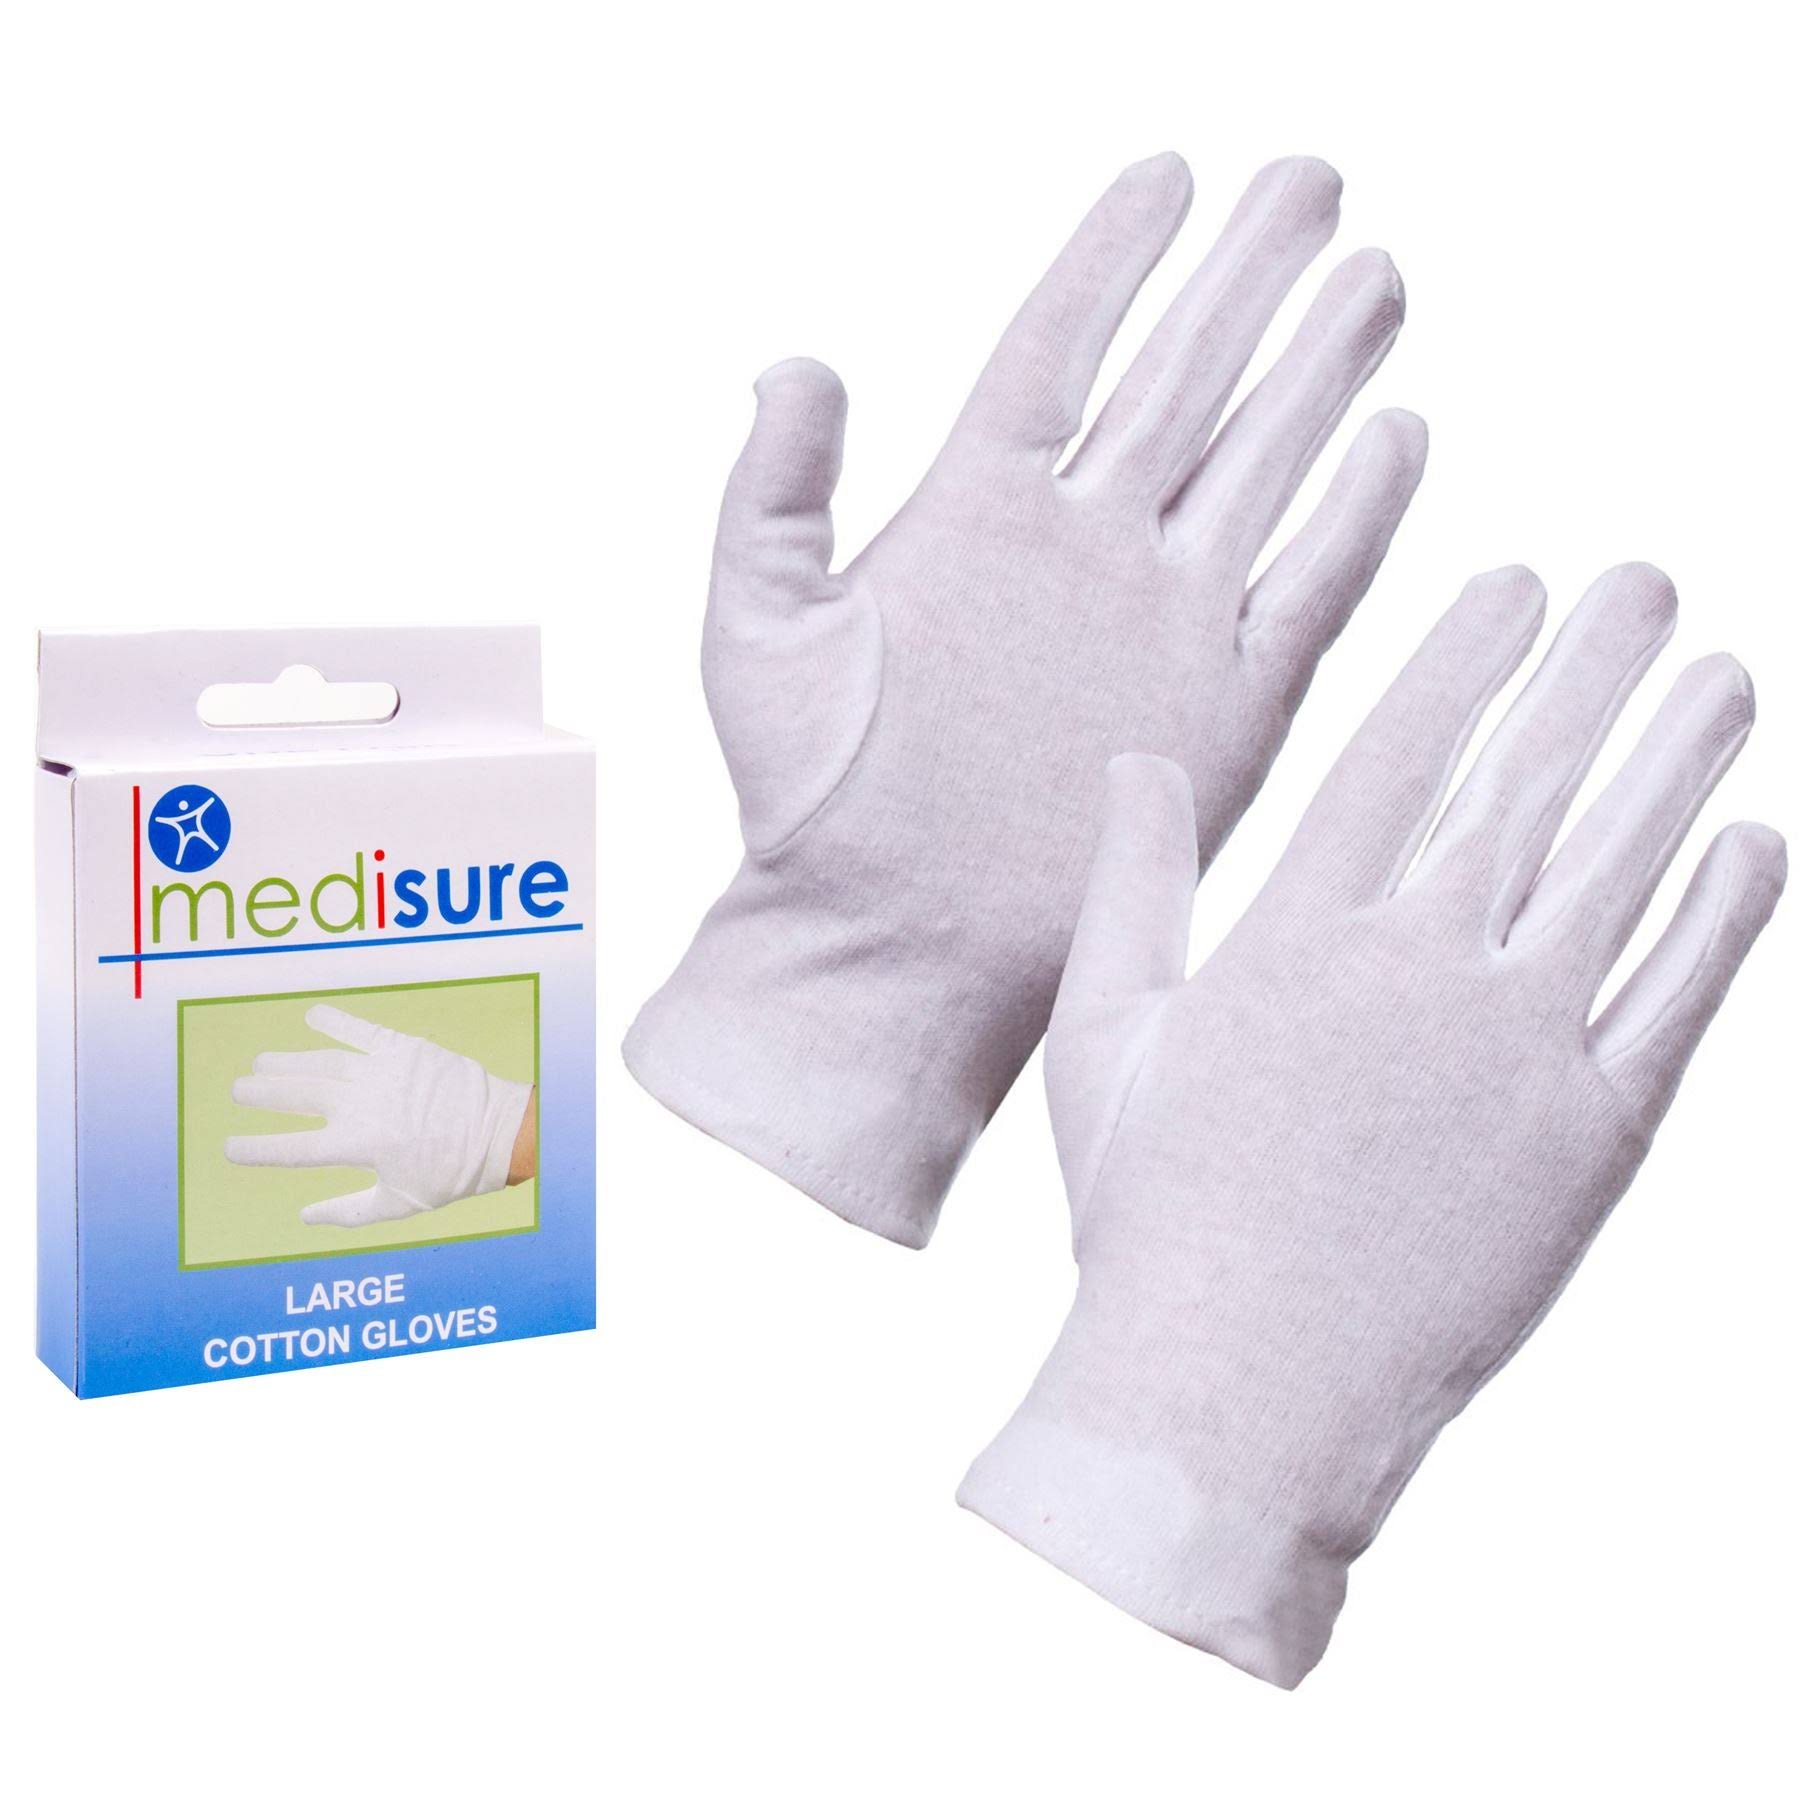 Medisure Large Cotton Gloves